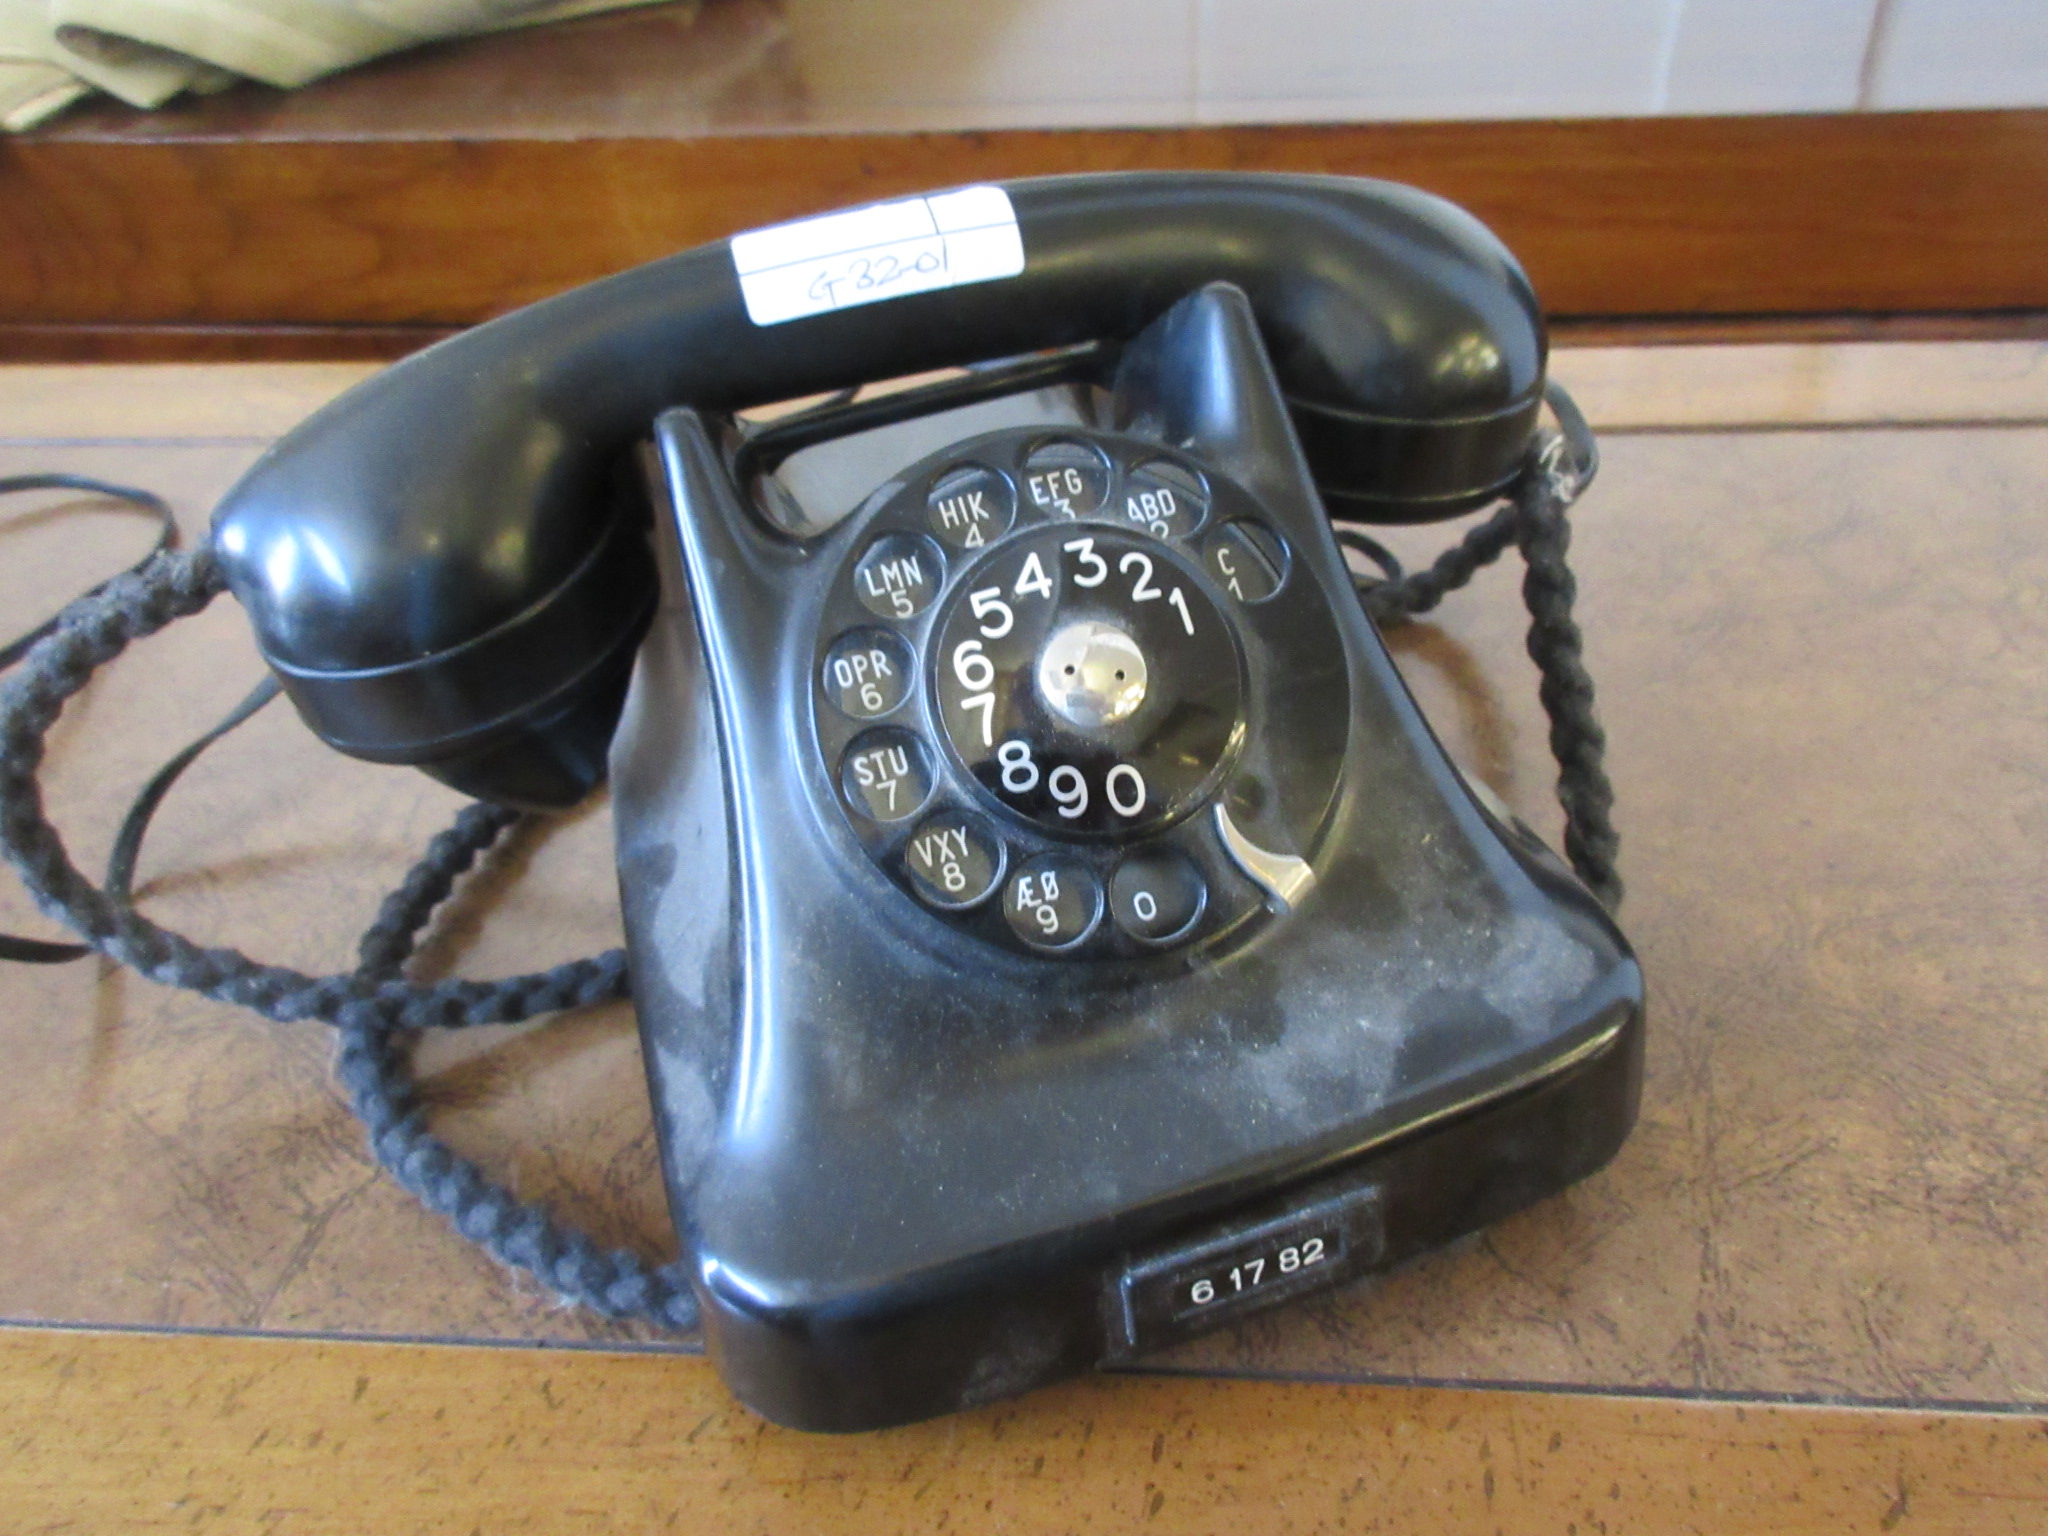 REFITTED VINTAGE BAKELITE TELEPHONE - Image 2 of 2